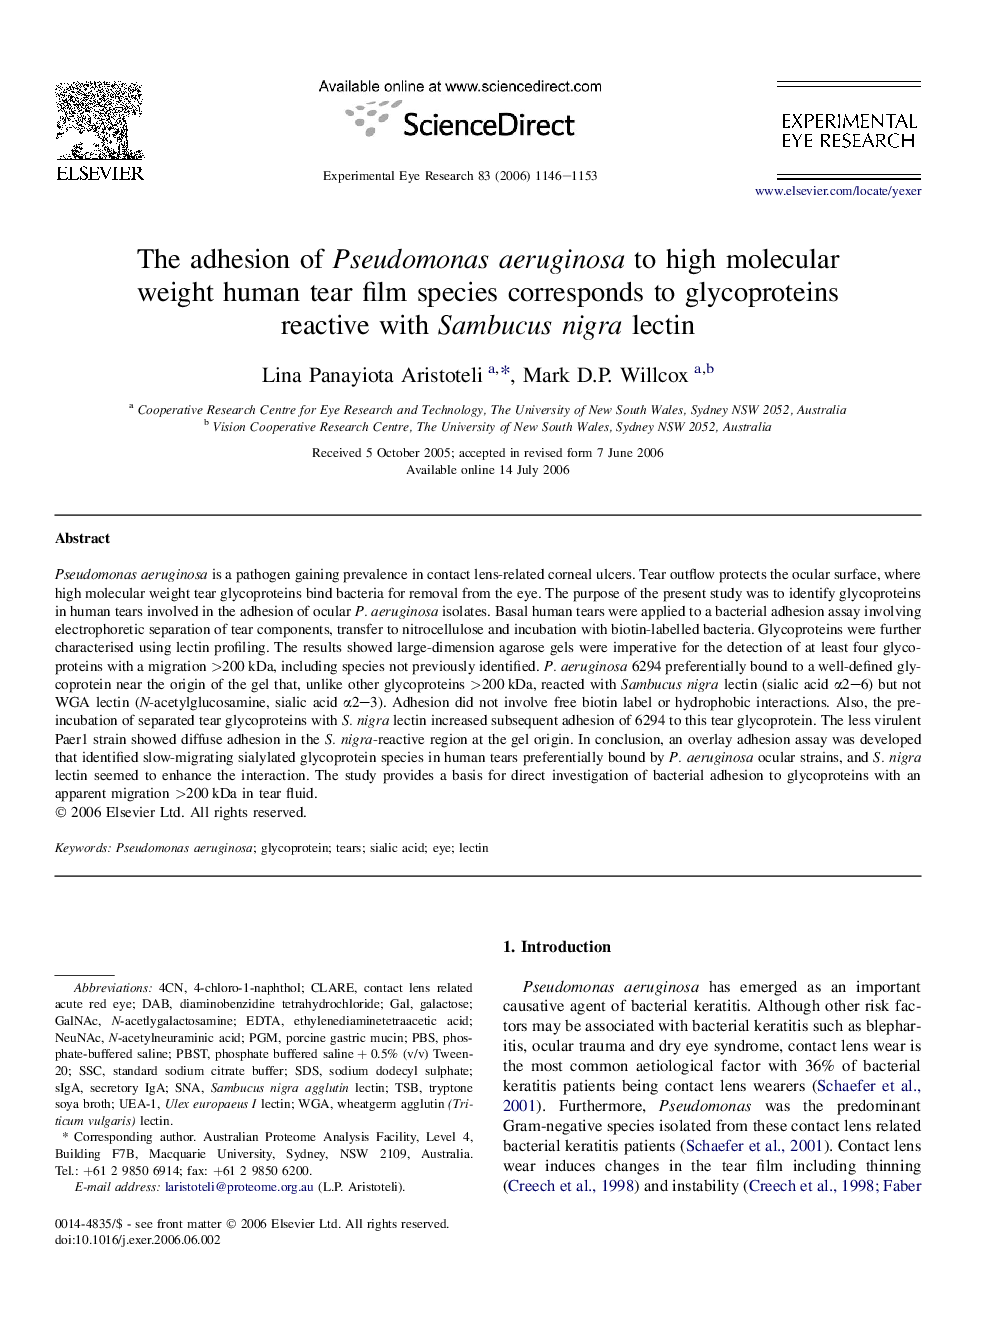 The adhesion of Pseudomonas aeruginosa to high molecular weight human tear film species corresponds to glycoproteins reactive with Sambucus nigra lectin